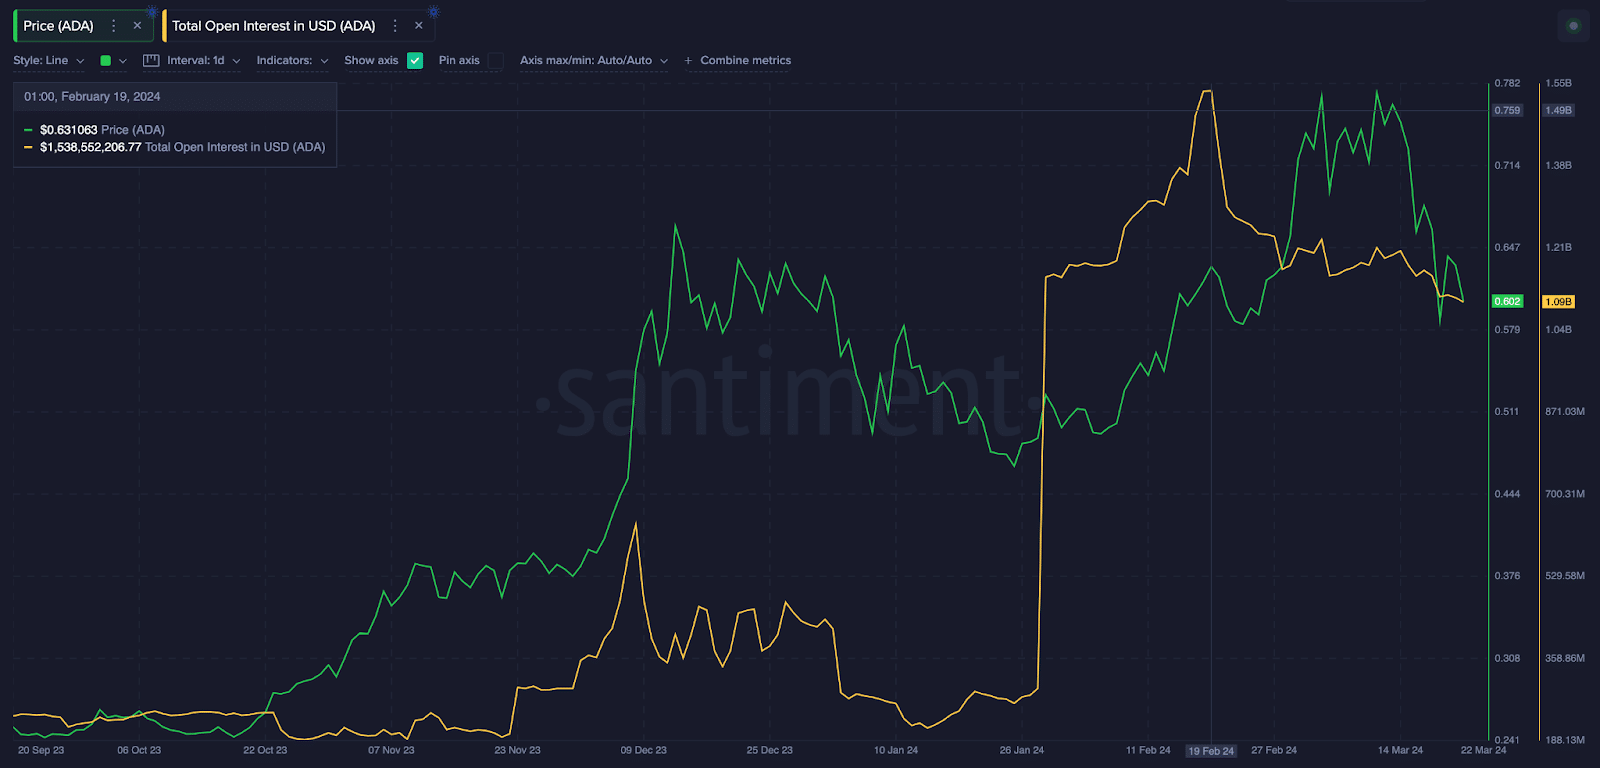 Cardano (ADA) open interest vs. price | Source: Santiment